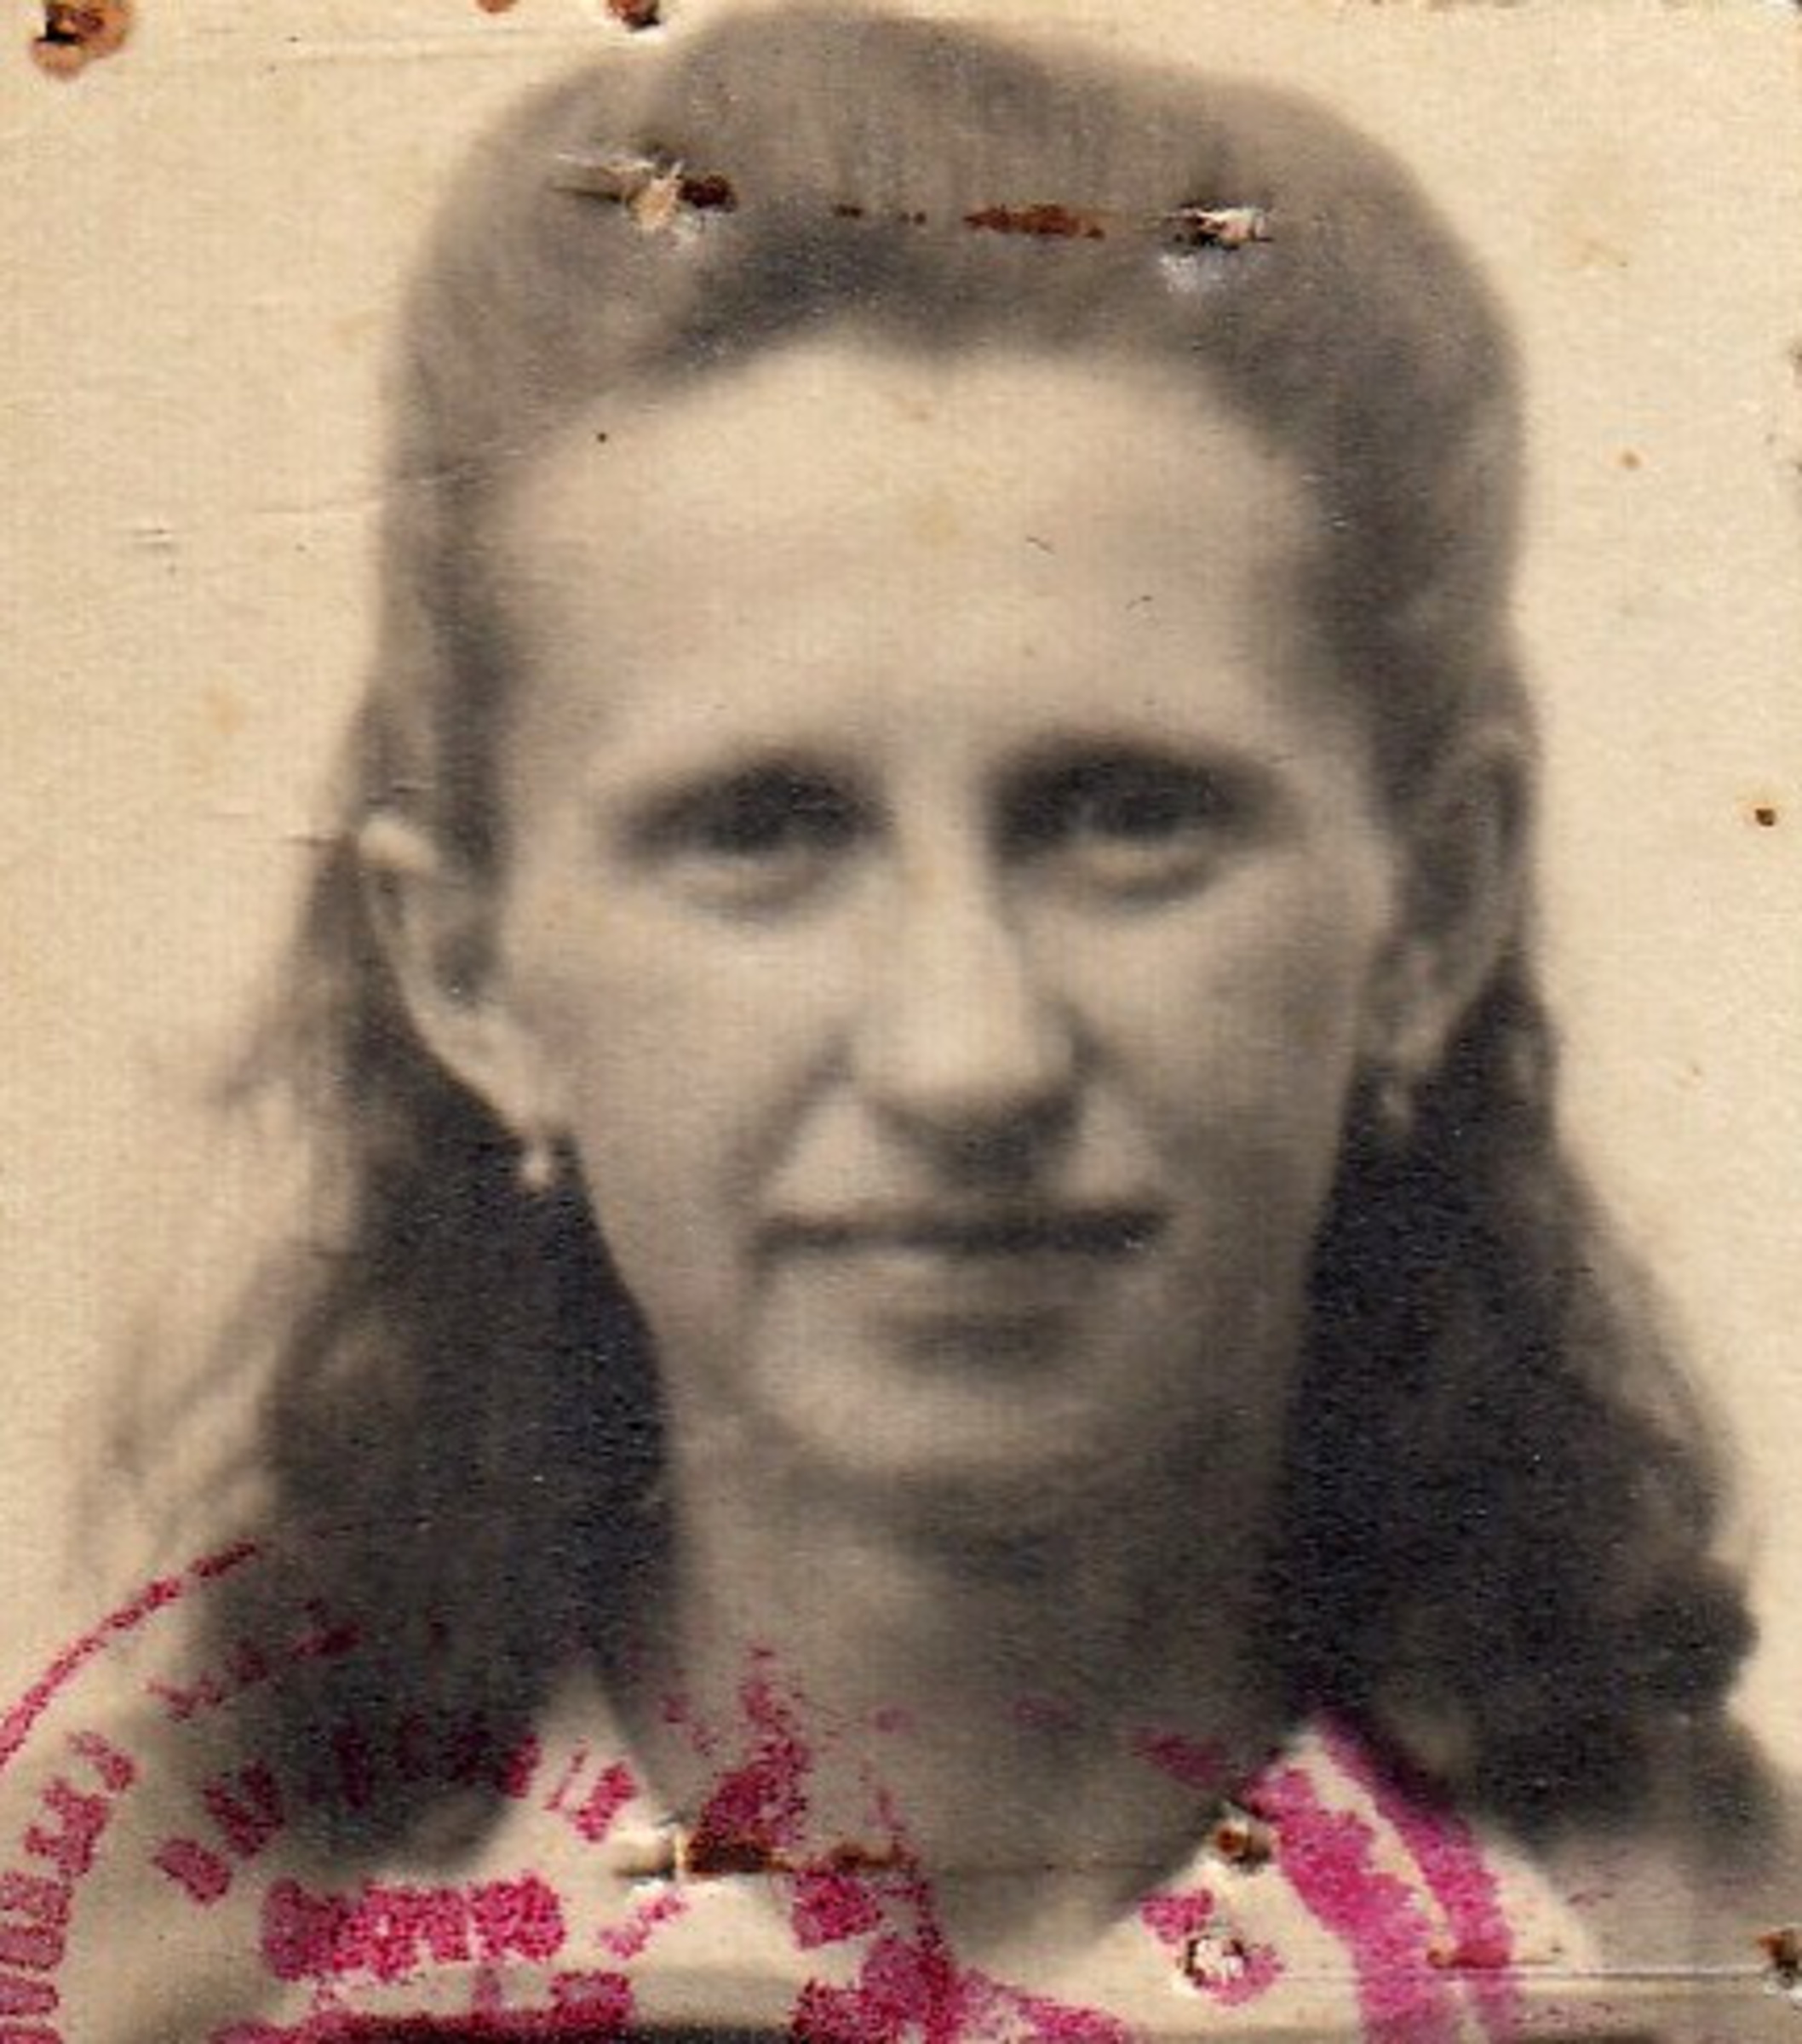 Marie Vegrichtová's profile picture, Krnov 1947